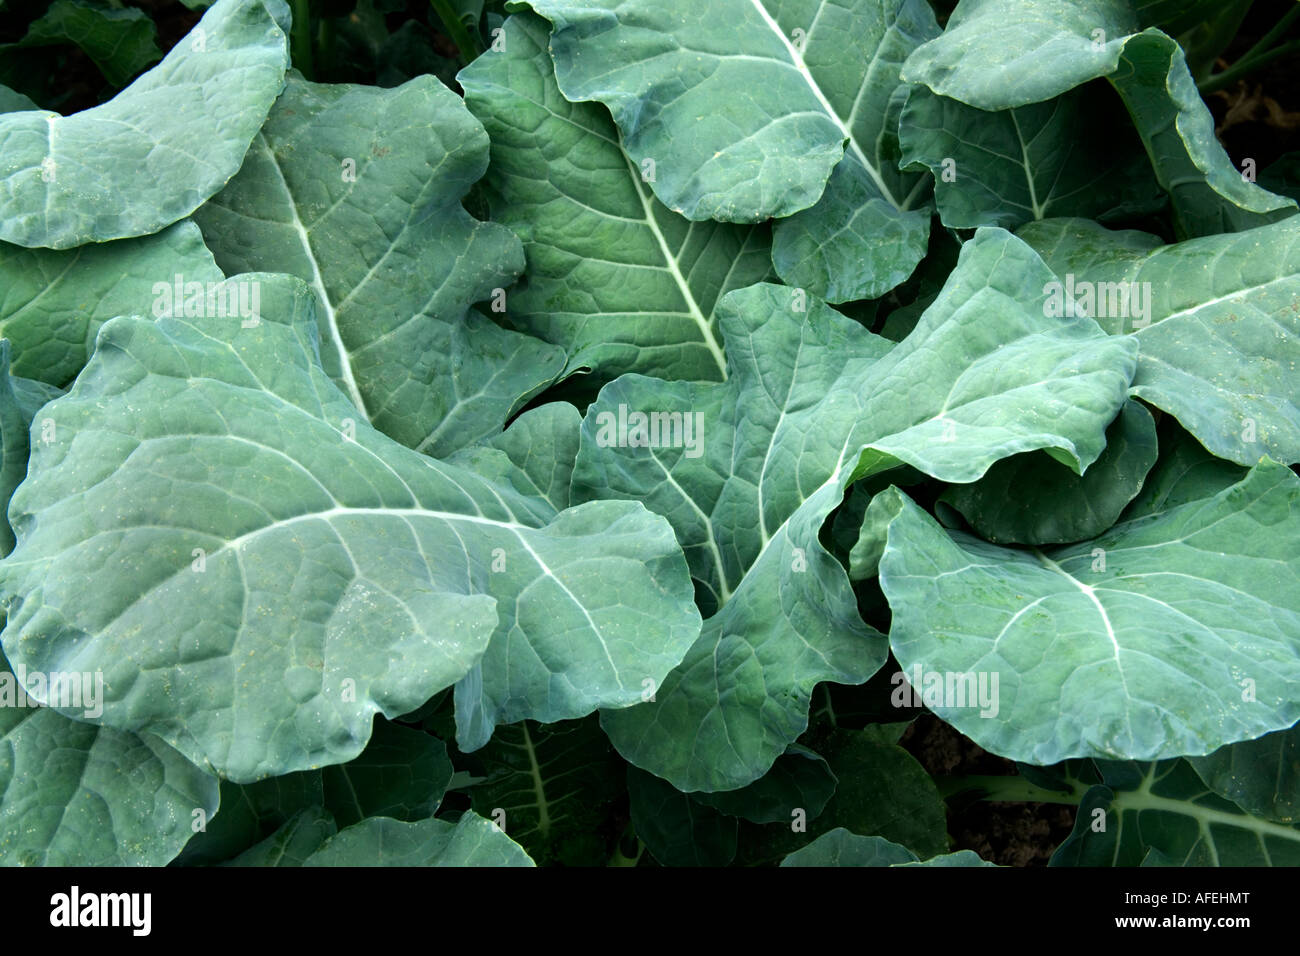 Kale leaves growing, California Stock Photo